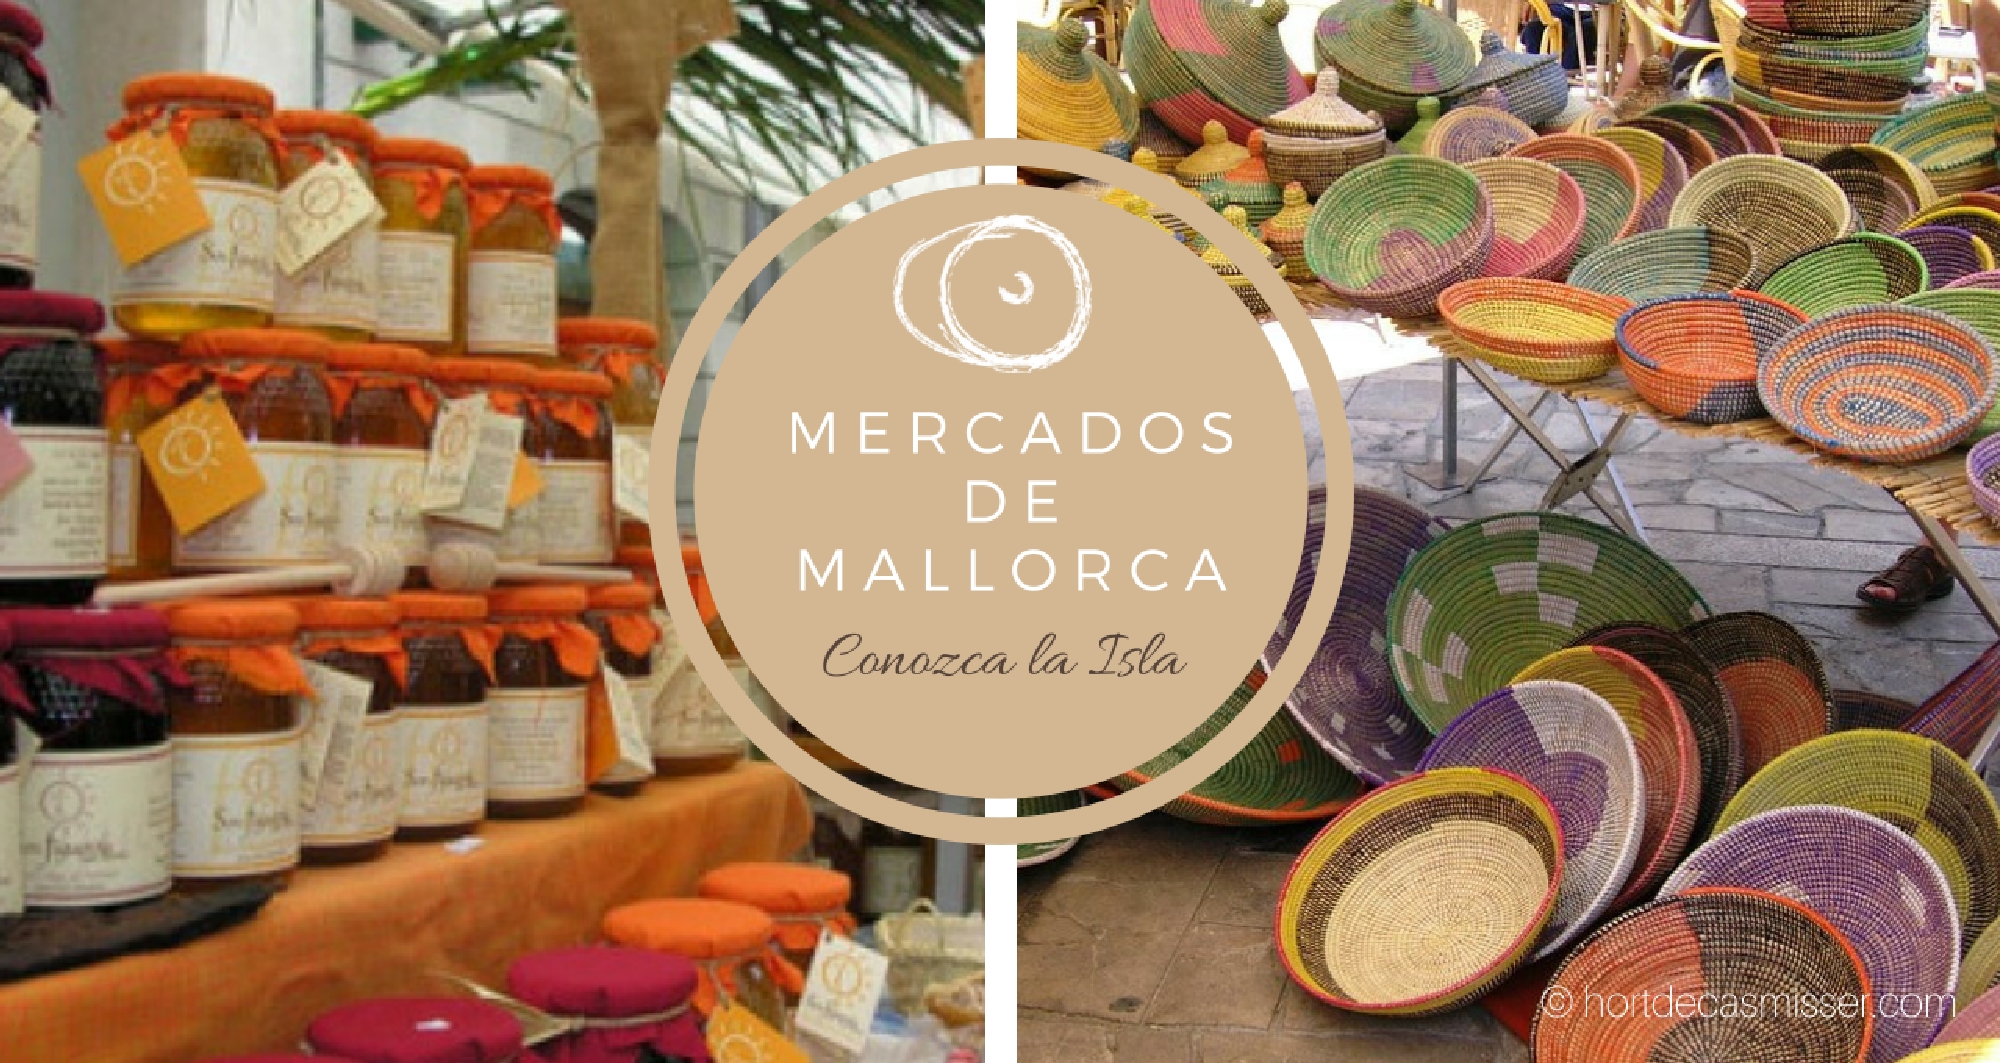 Visit the Local Markets of Mallorca